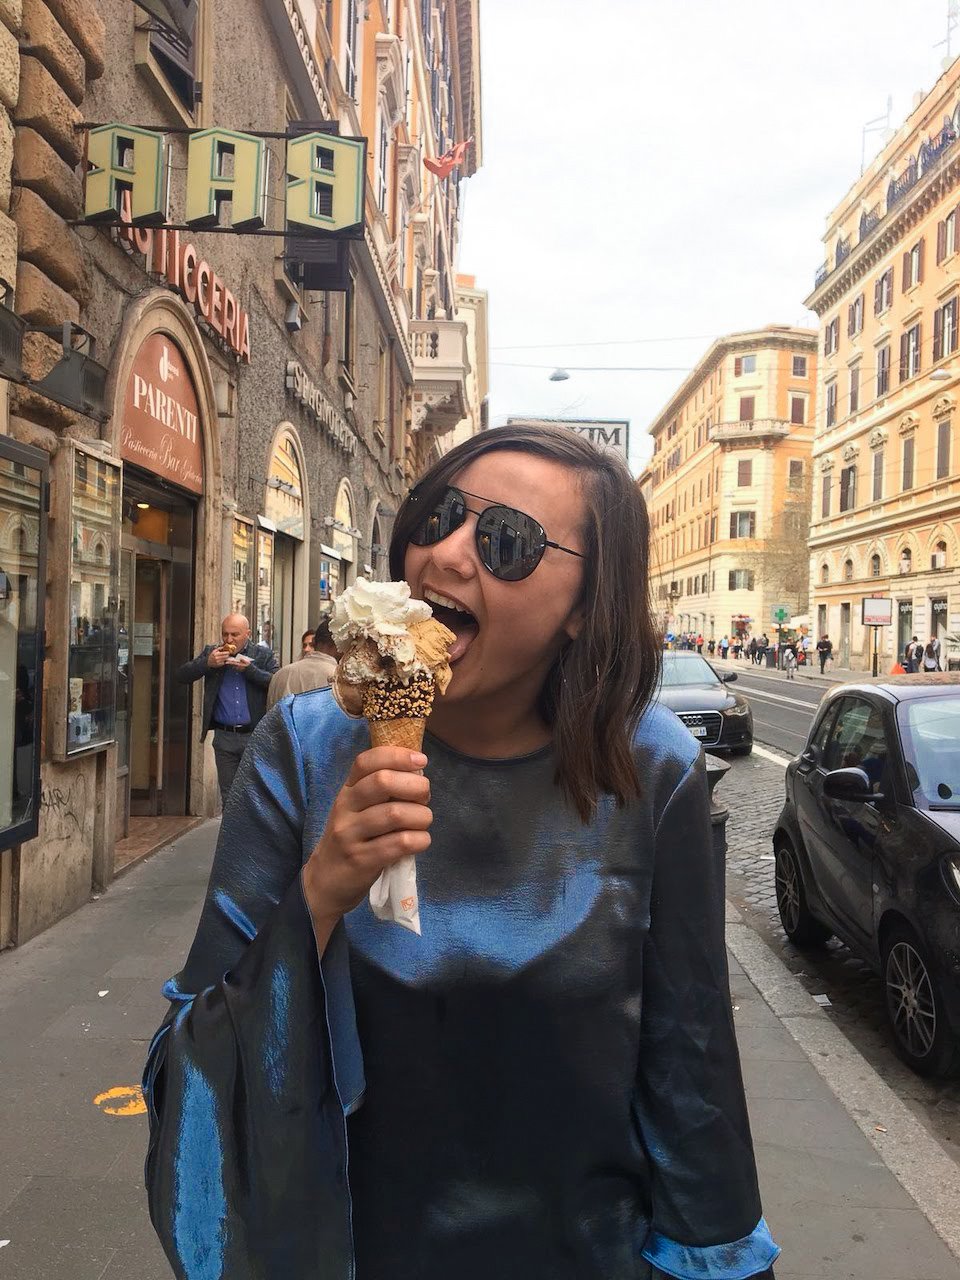 TrovaTrip traveler in black sunglasses eating gelato on a cone in Italy's sidewalks